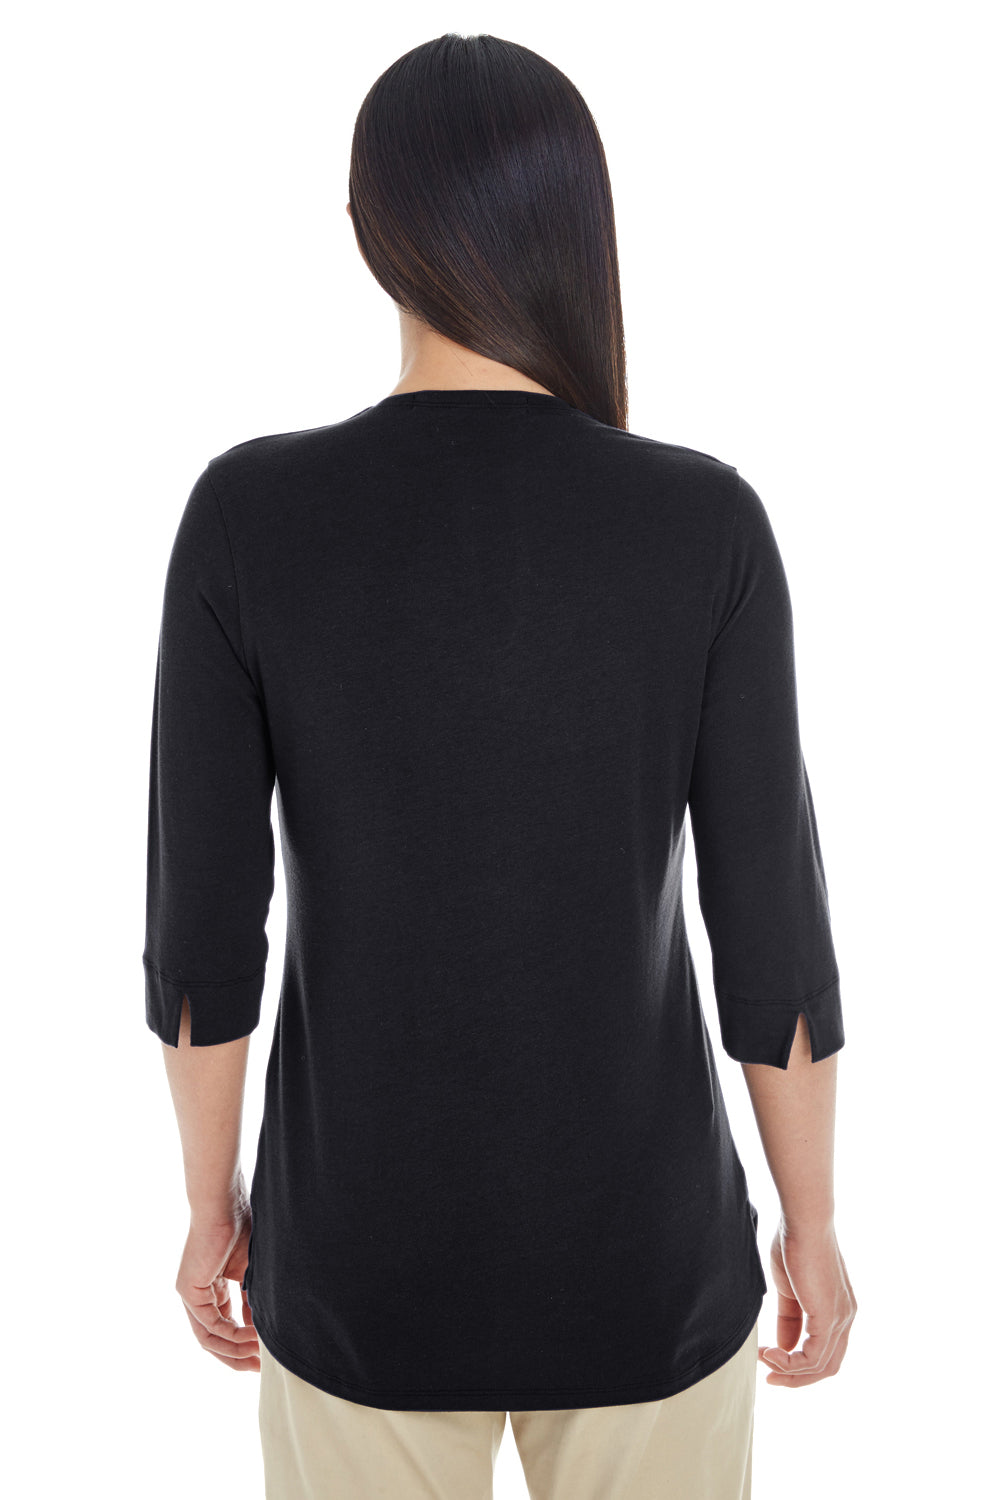 Devon & Jones DP188W Womens Perfect Fit 3/4 Sleeve Polo Shirt Black Back